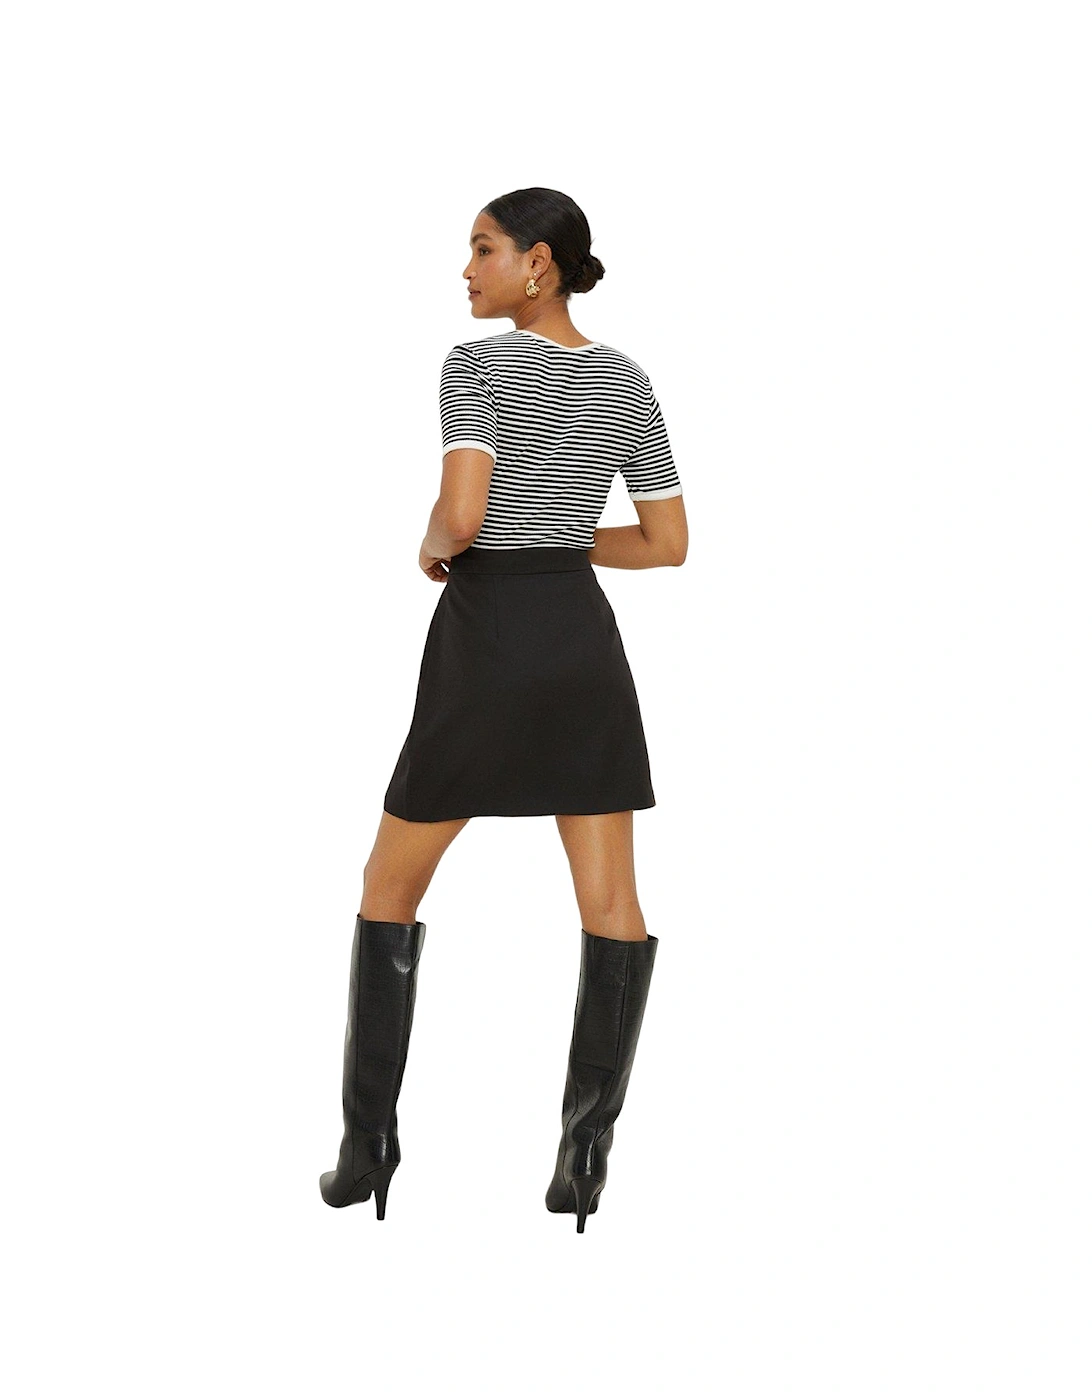 Womens/Ladies Wrap Tailored Mini Skirt